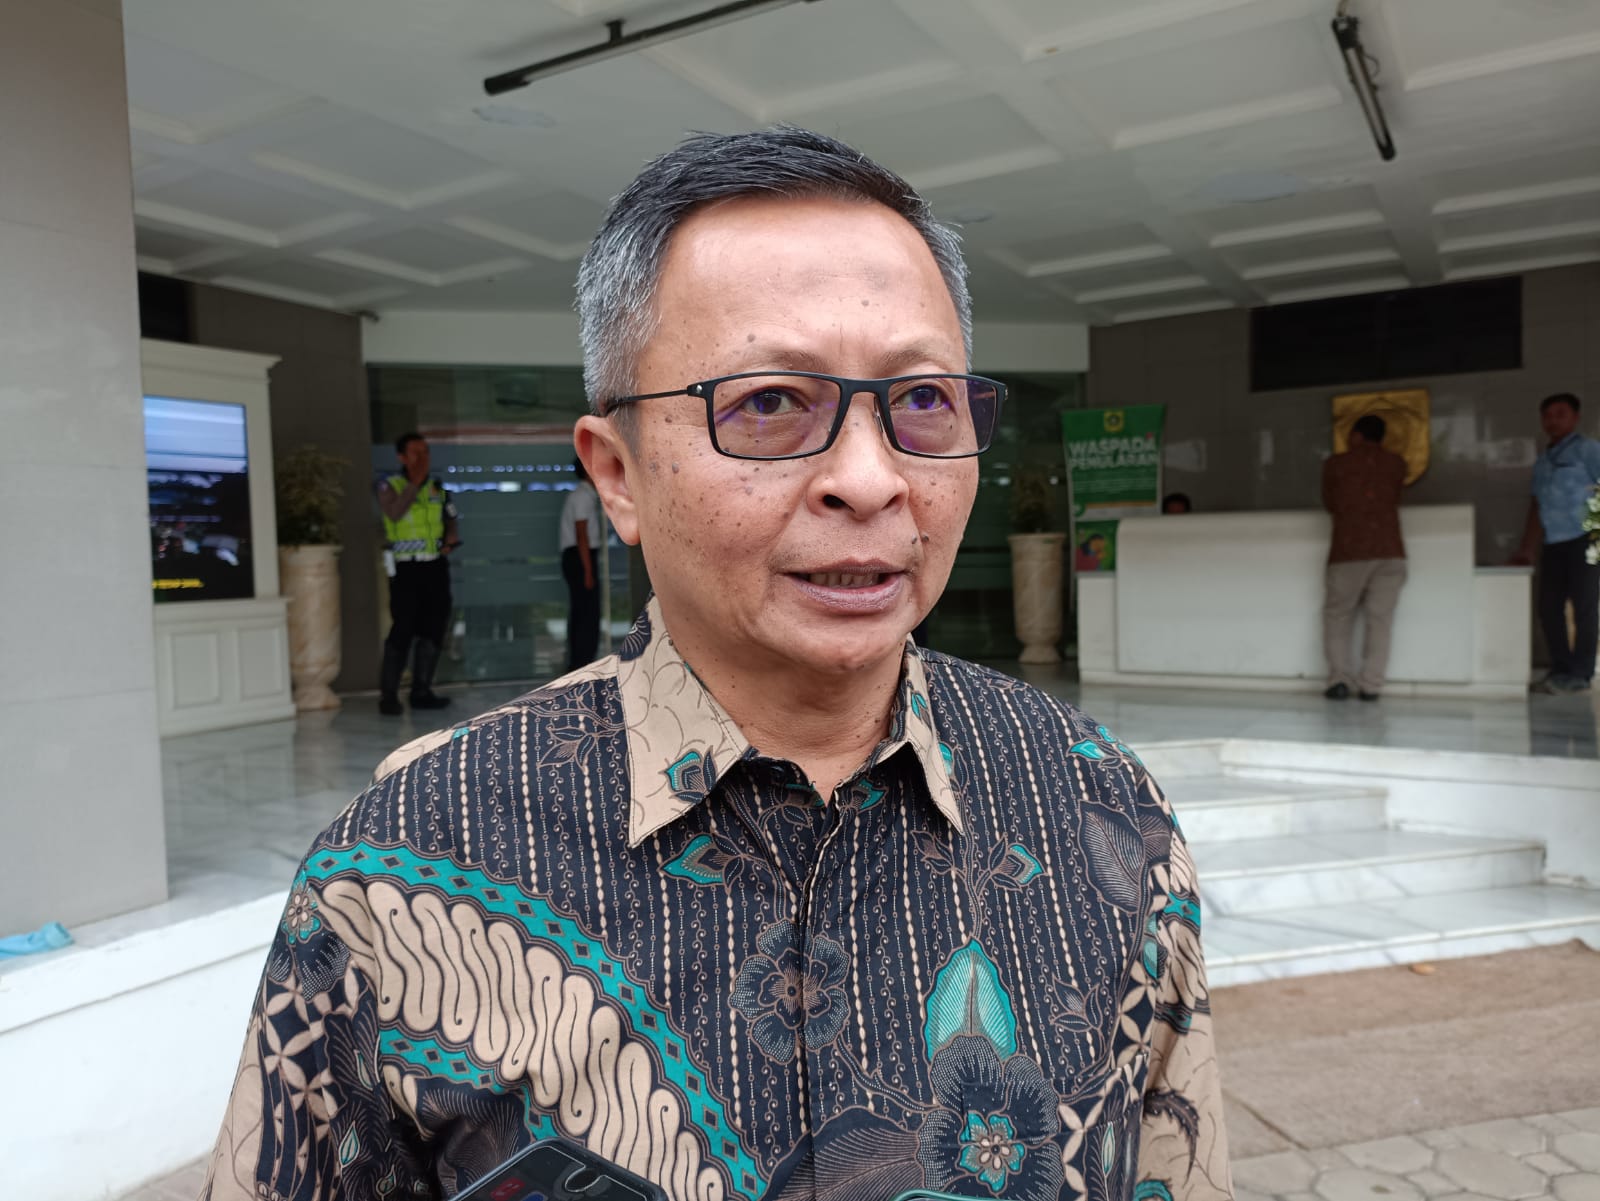 BHPRD Tak Kunjung Cair, Respons Kadis DPMD: Tunggu Rekomendasi Kemendagri / Sandika Fadilah